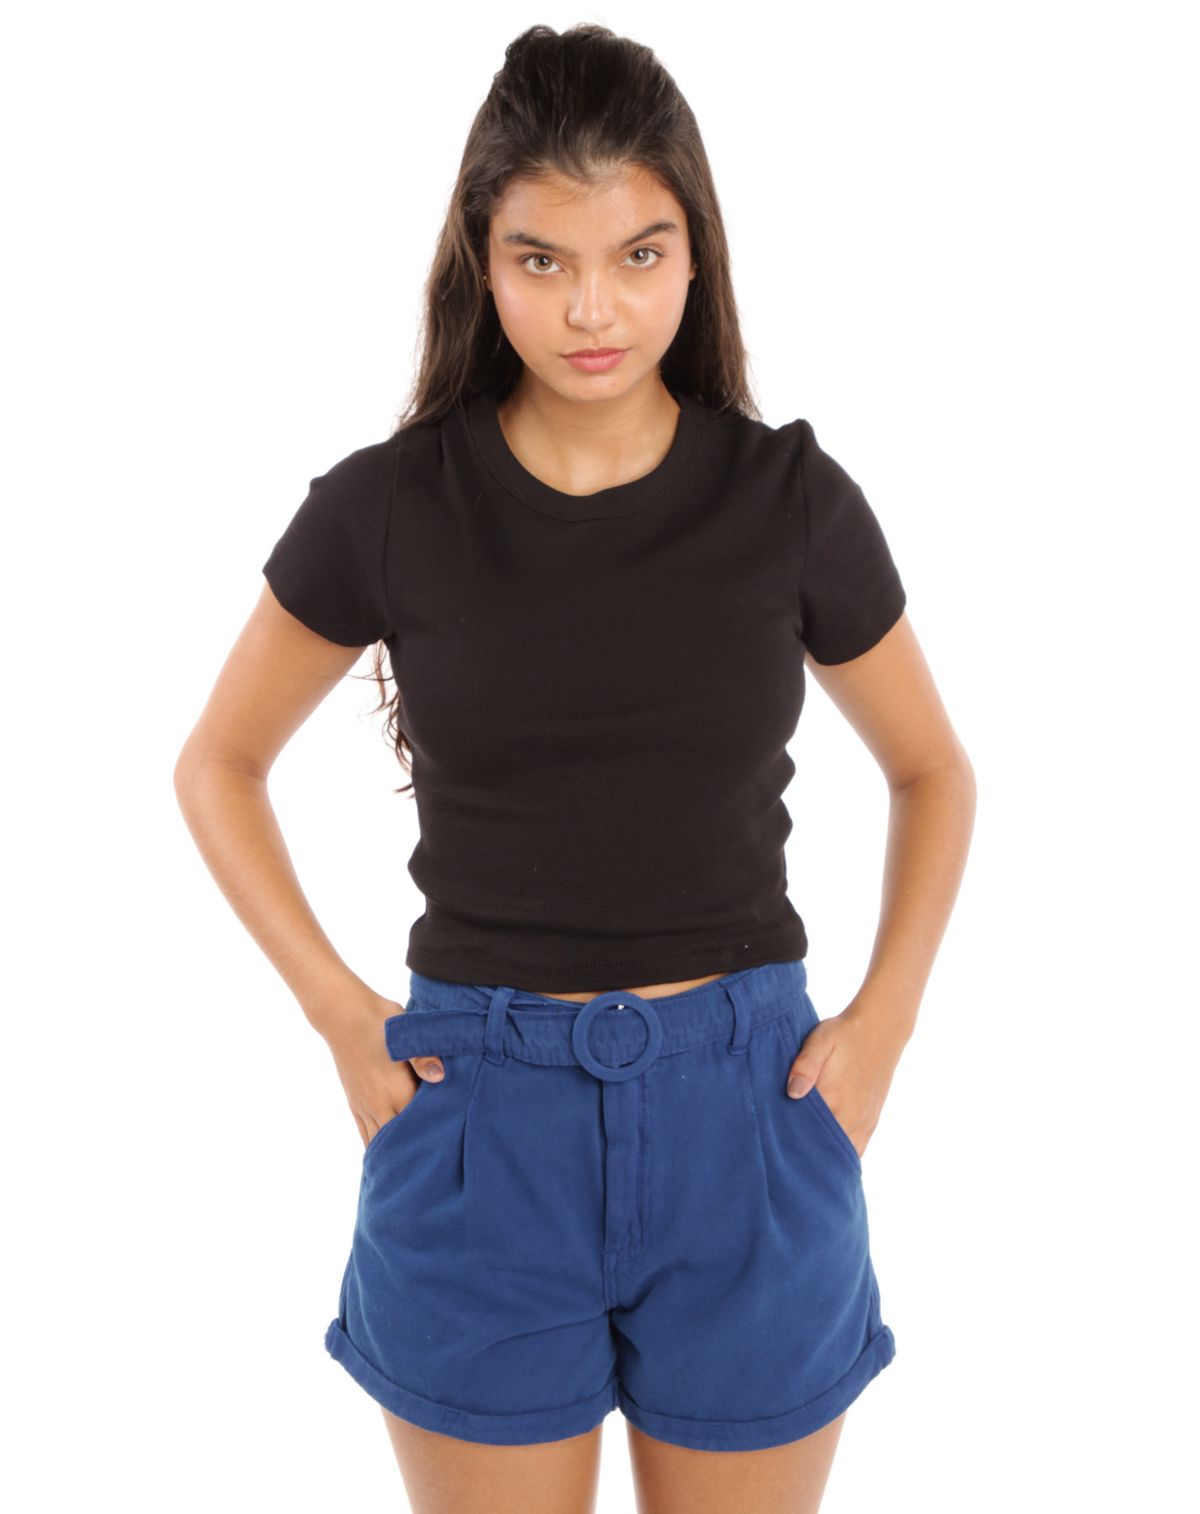 672296005-camiseta-feminina-manga-curta-basica-decote-redondo-lojas-besni-preto-p-59a